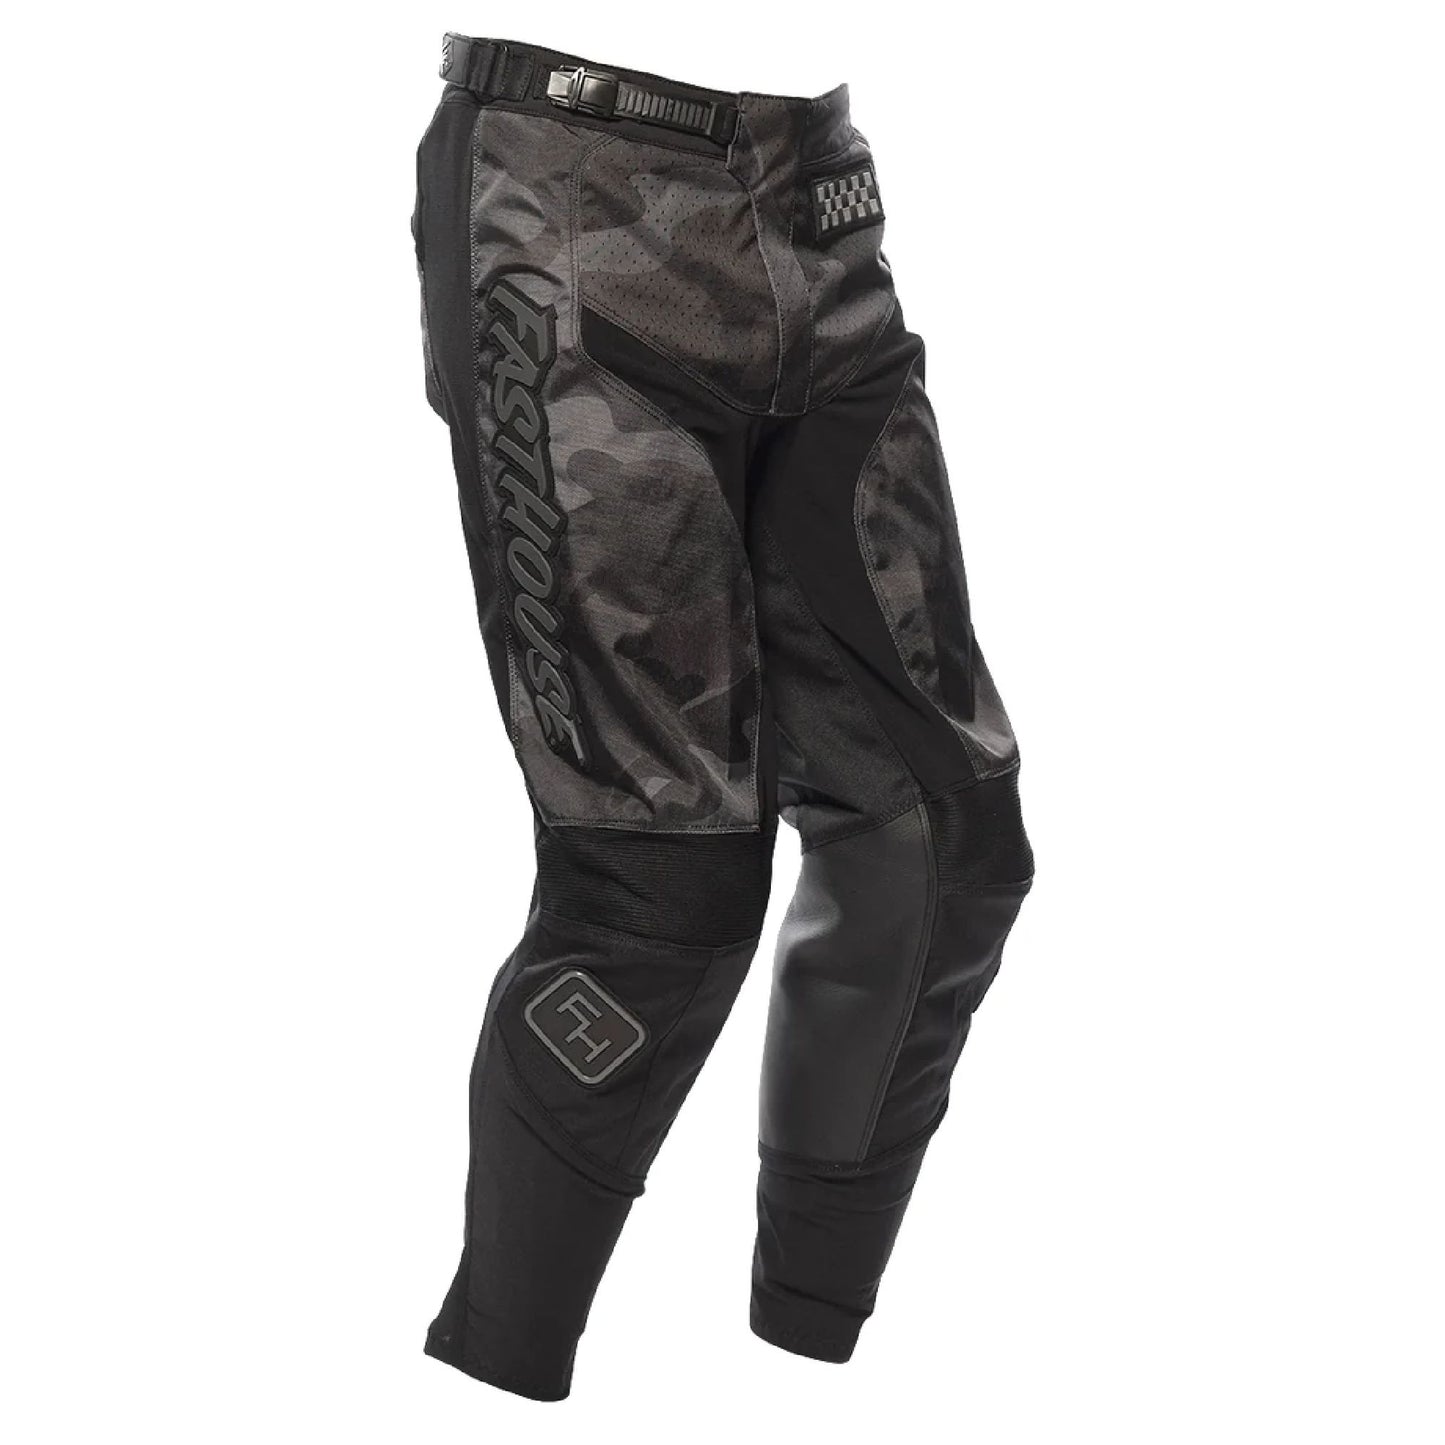 Fasthouse Grindhouse Pants Camo Black Bike Pants